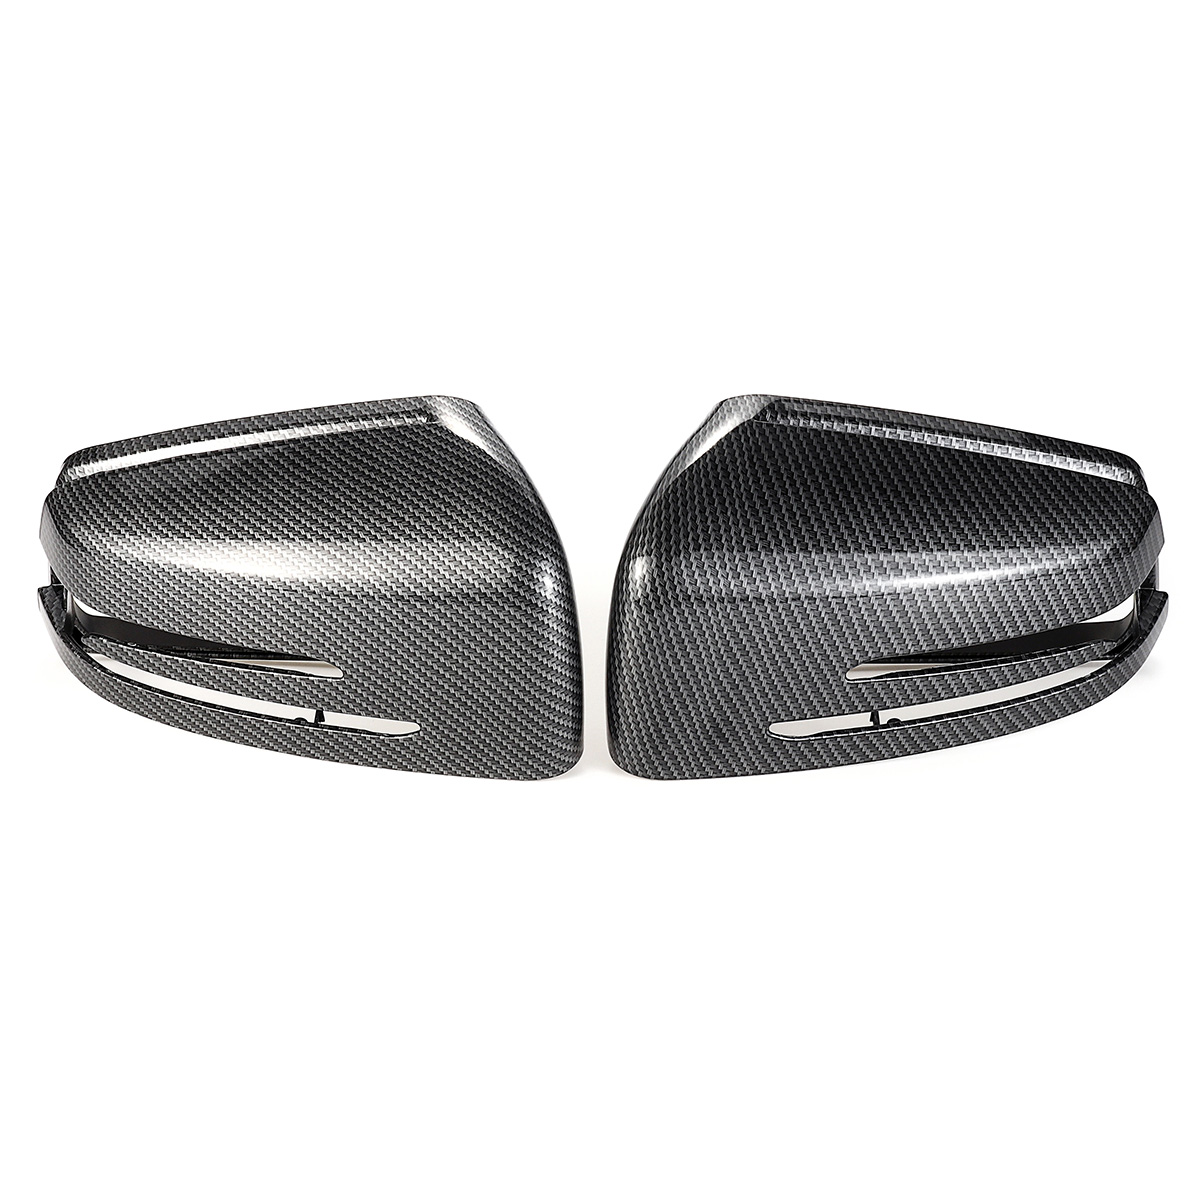 

2Pcs Car Carbon Fiber Rearview Mirror Cover Caps for Mercedes Benz W204 X204 W212 W221 C300 C218